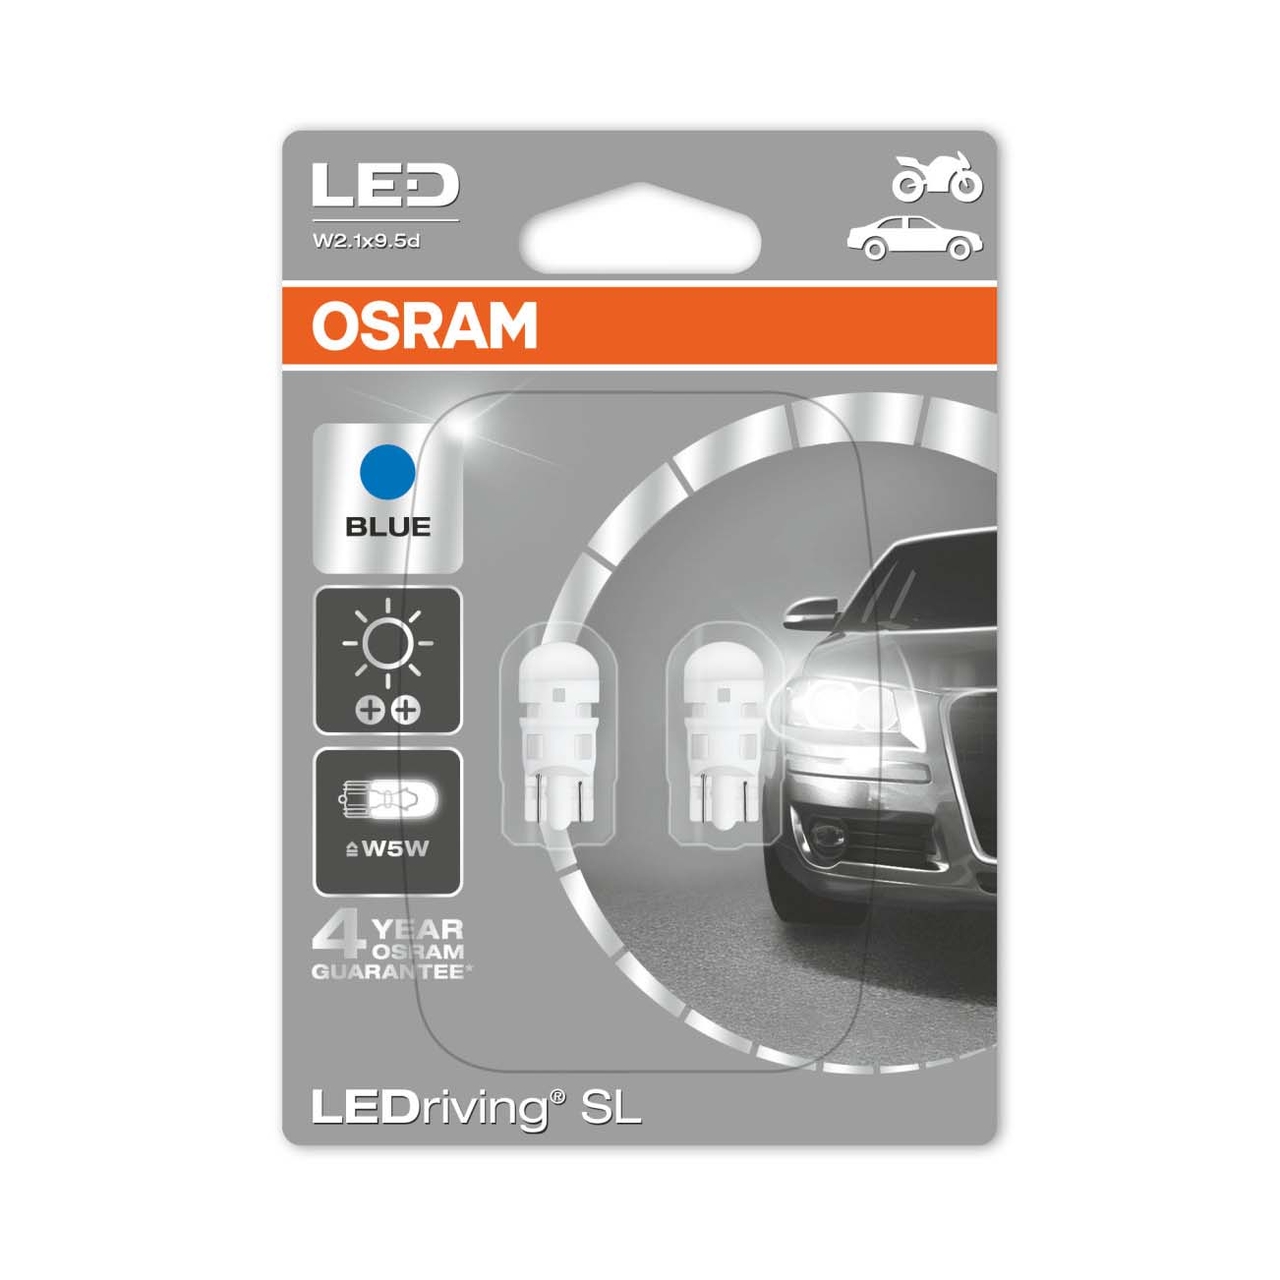 2x For OSRAM 2980CW Car Auxiliary Bulbs LED W5W 12V1.5W W2.1x9.5d OW